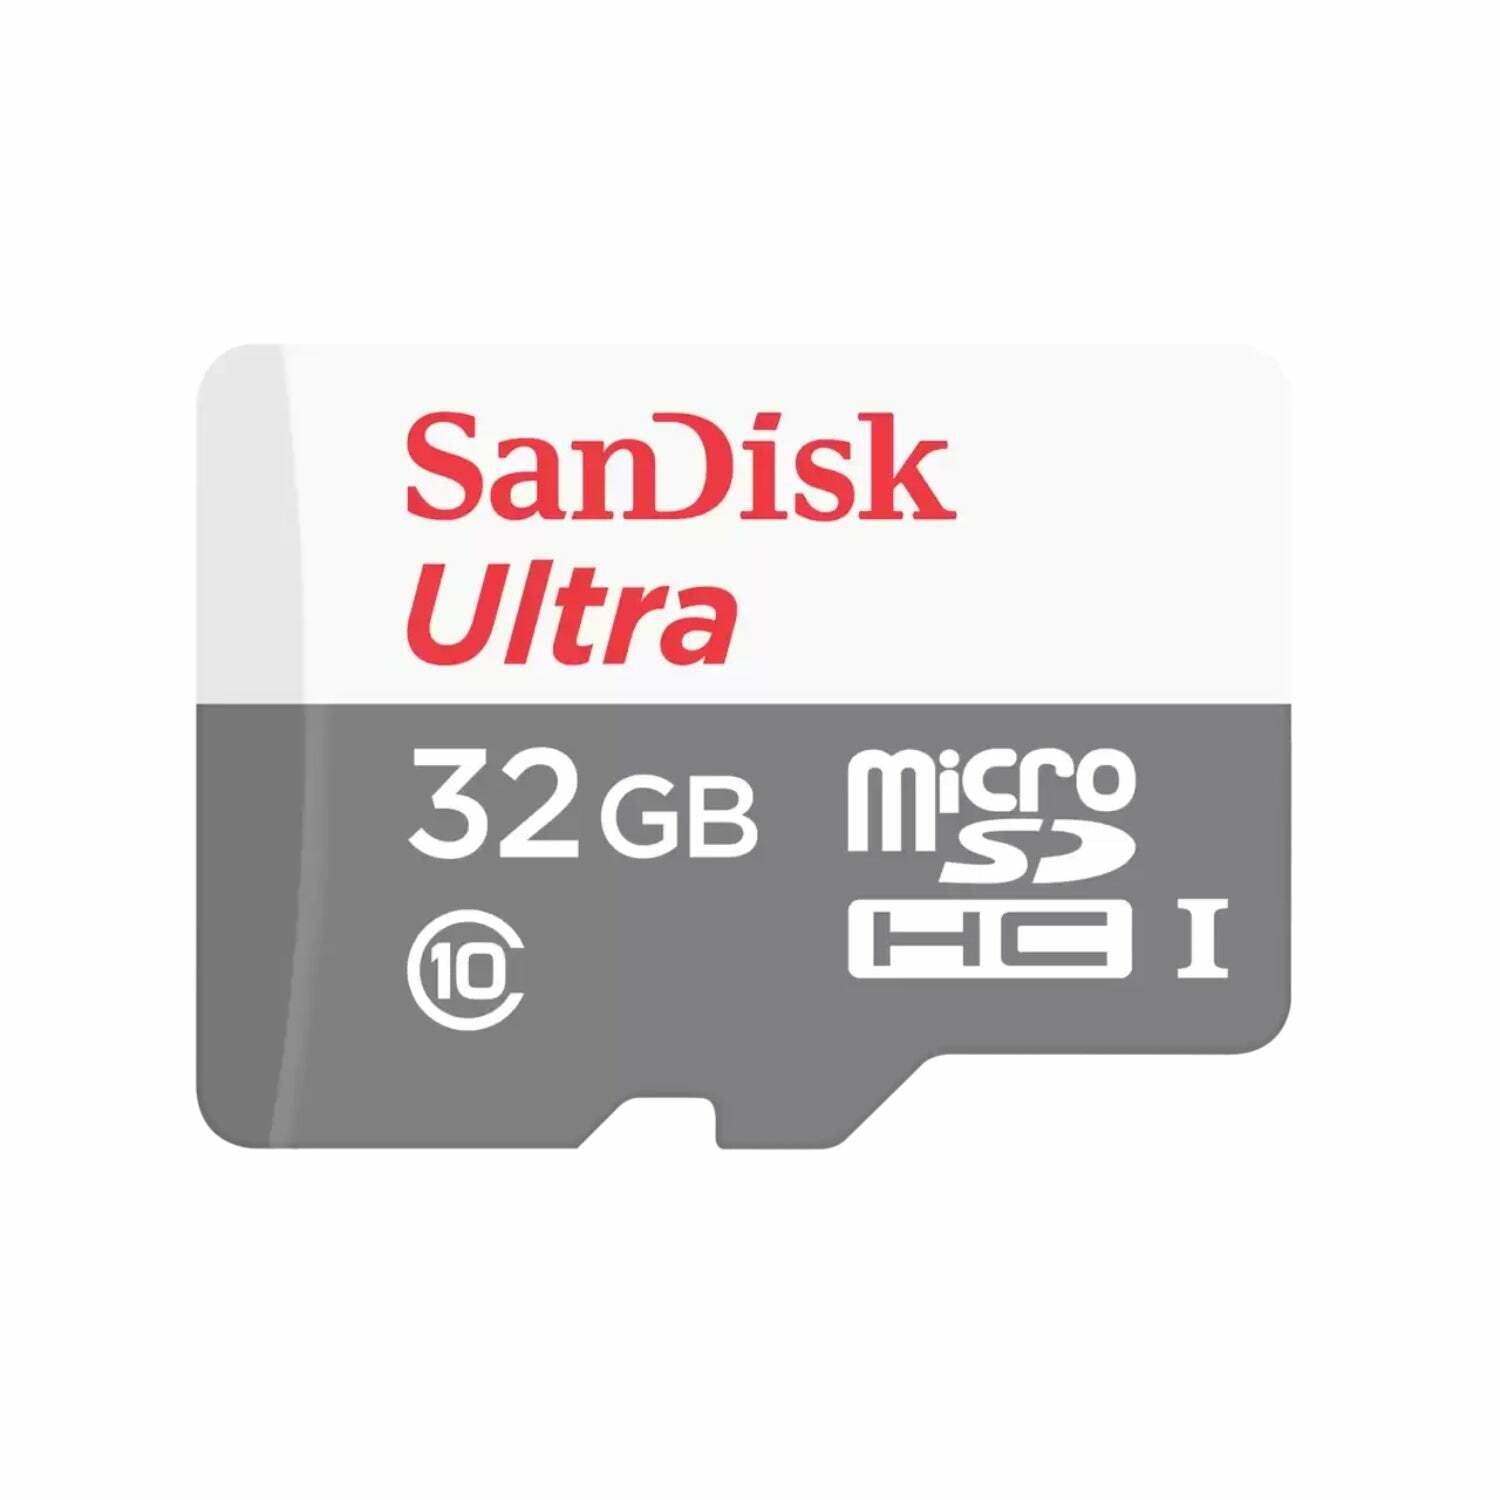 SanDisk Ultra 32GB 100MB/s Class 10 microSDHC Memory Card